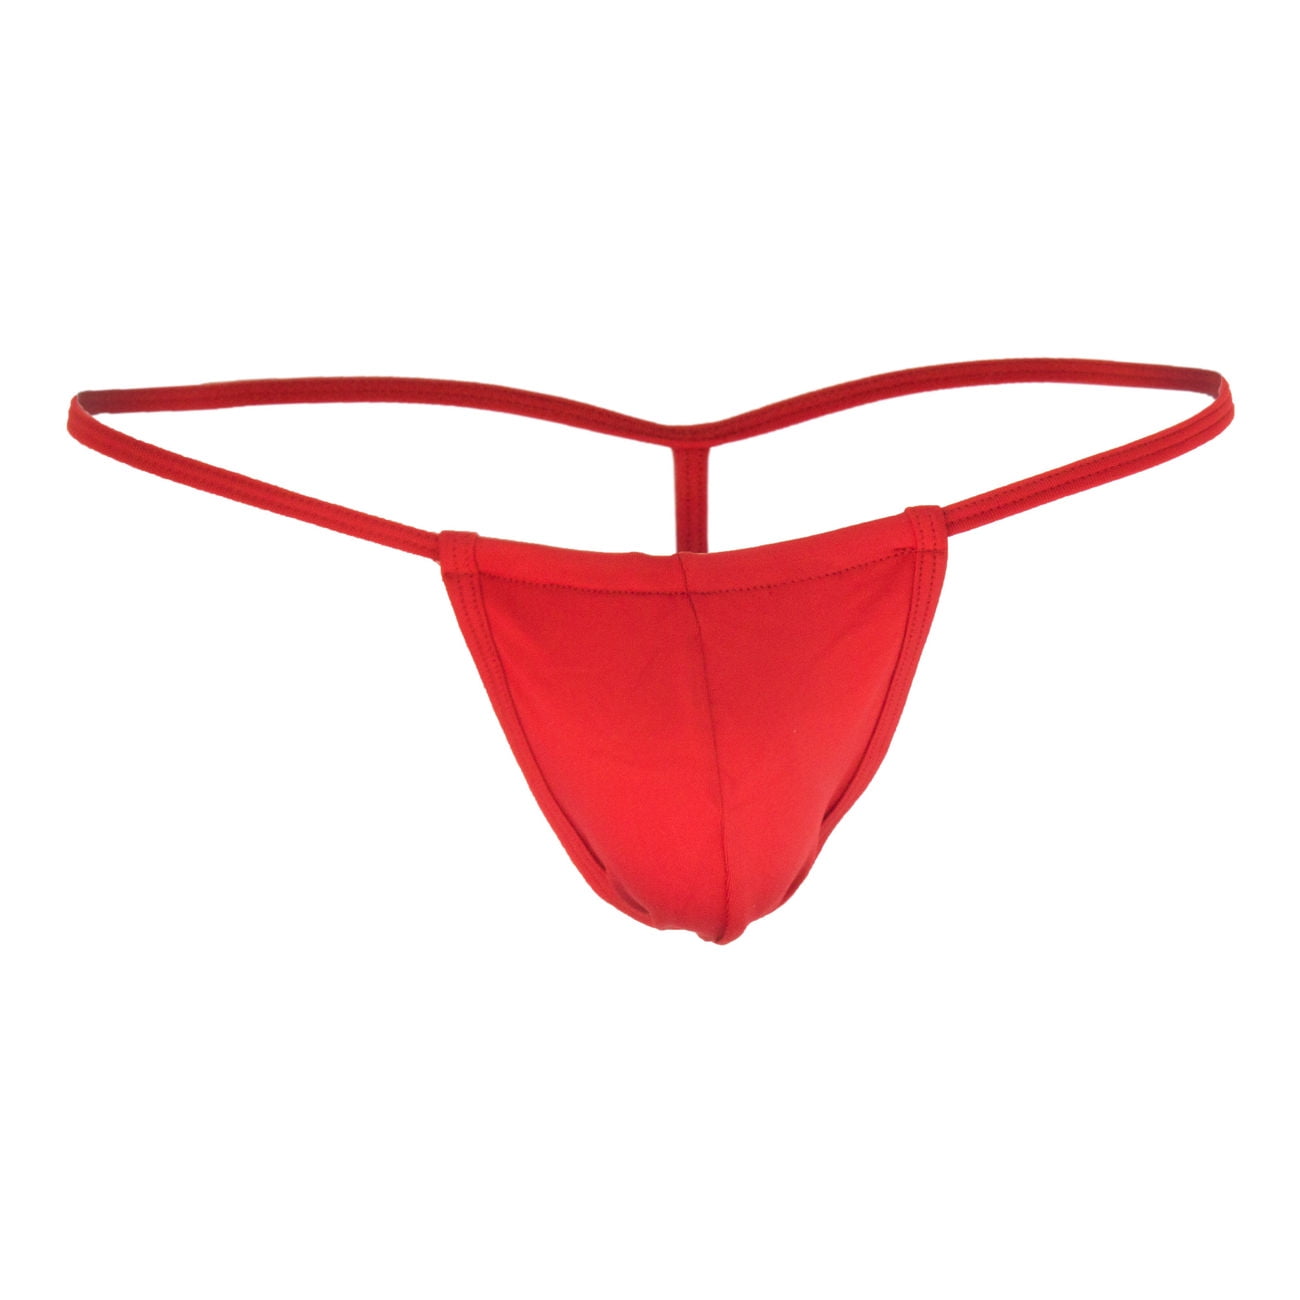 Candyman 99421 Lace G-string Thongs Black –  - Men's  Underwear and Swimwear